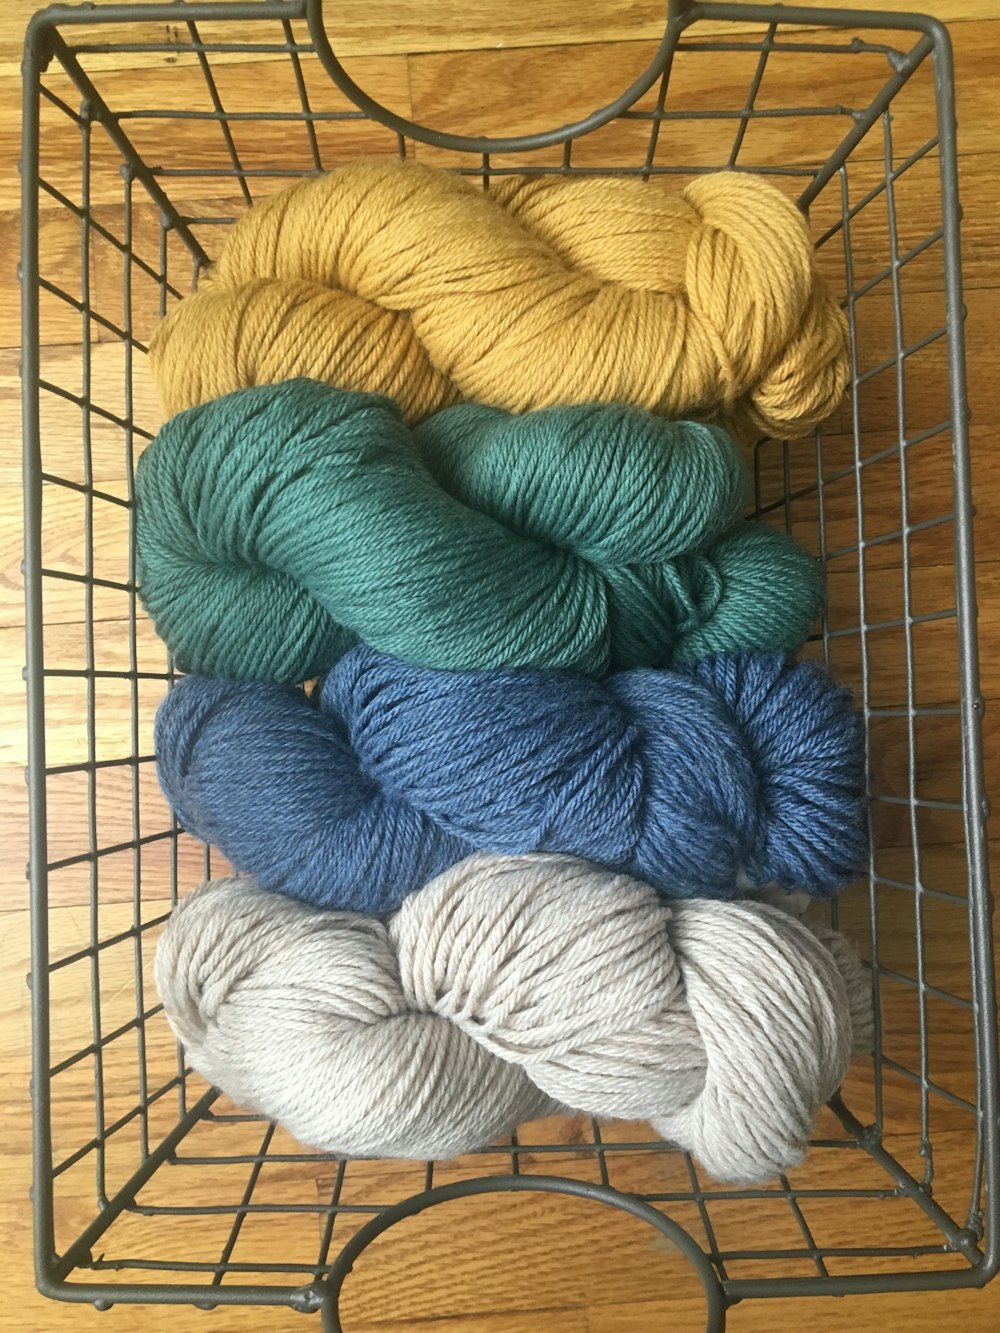 yellow, green, blue, and white yarn